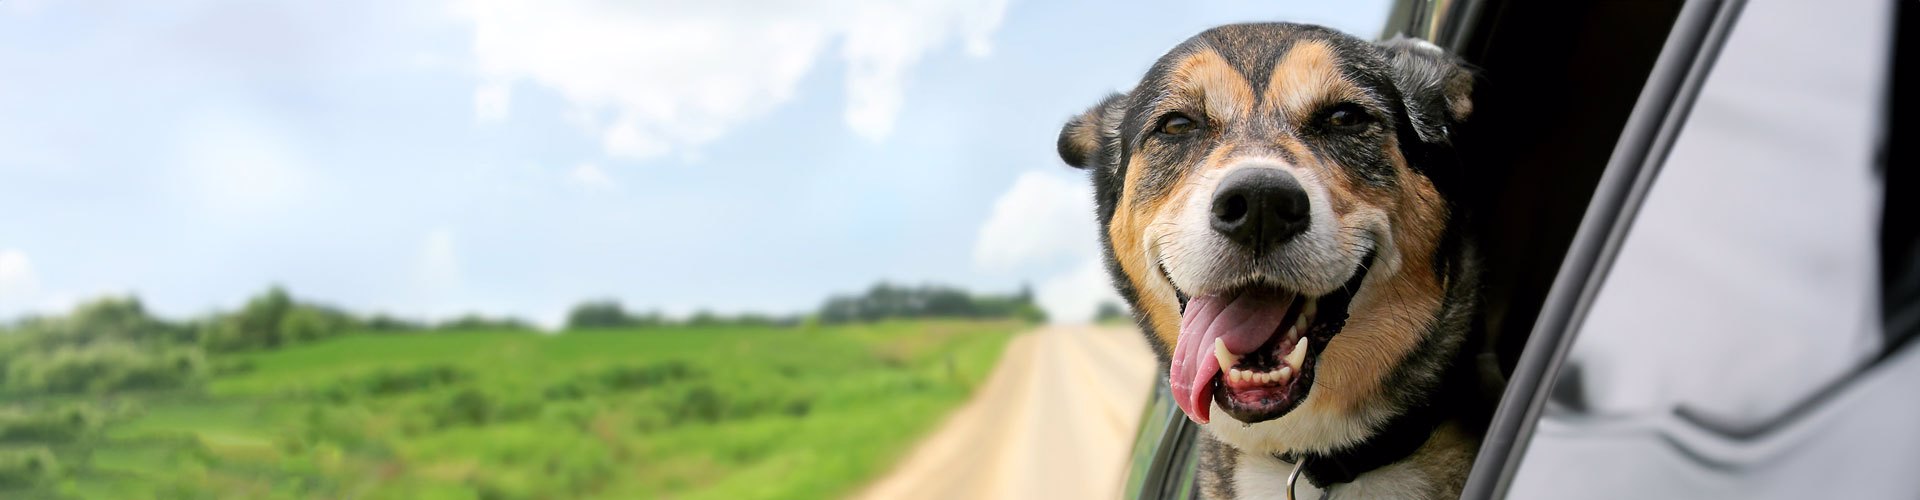 dog in a car on a road trip